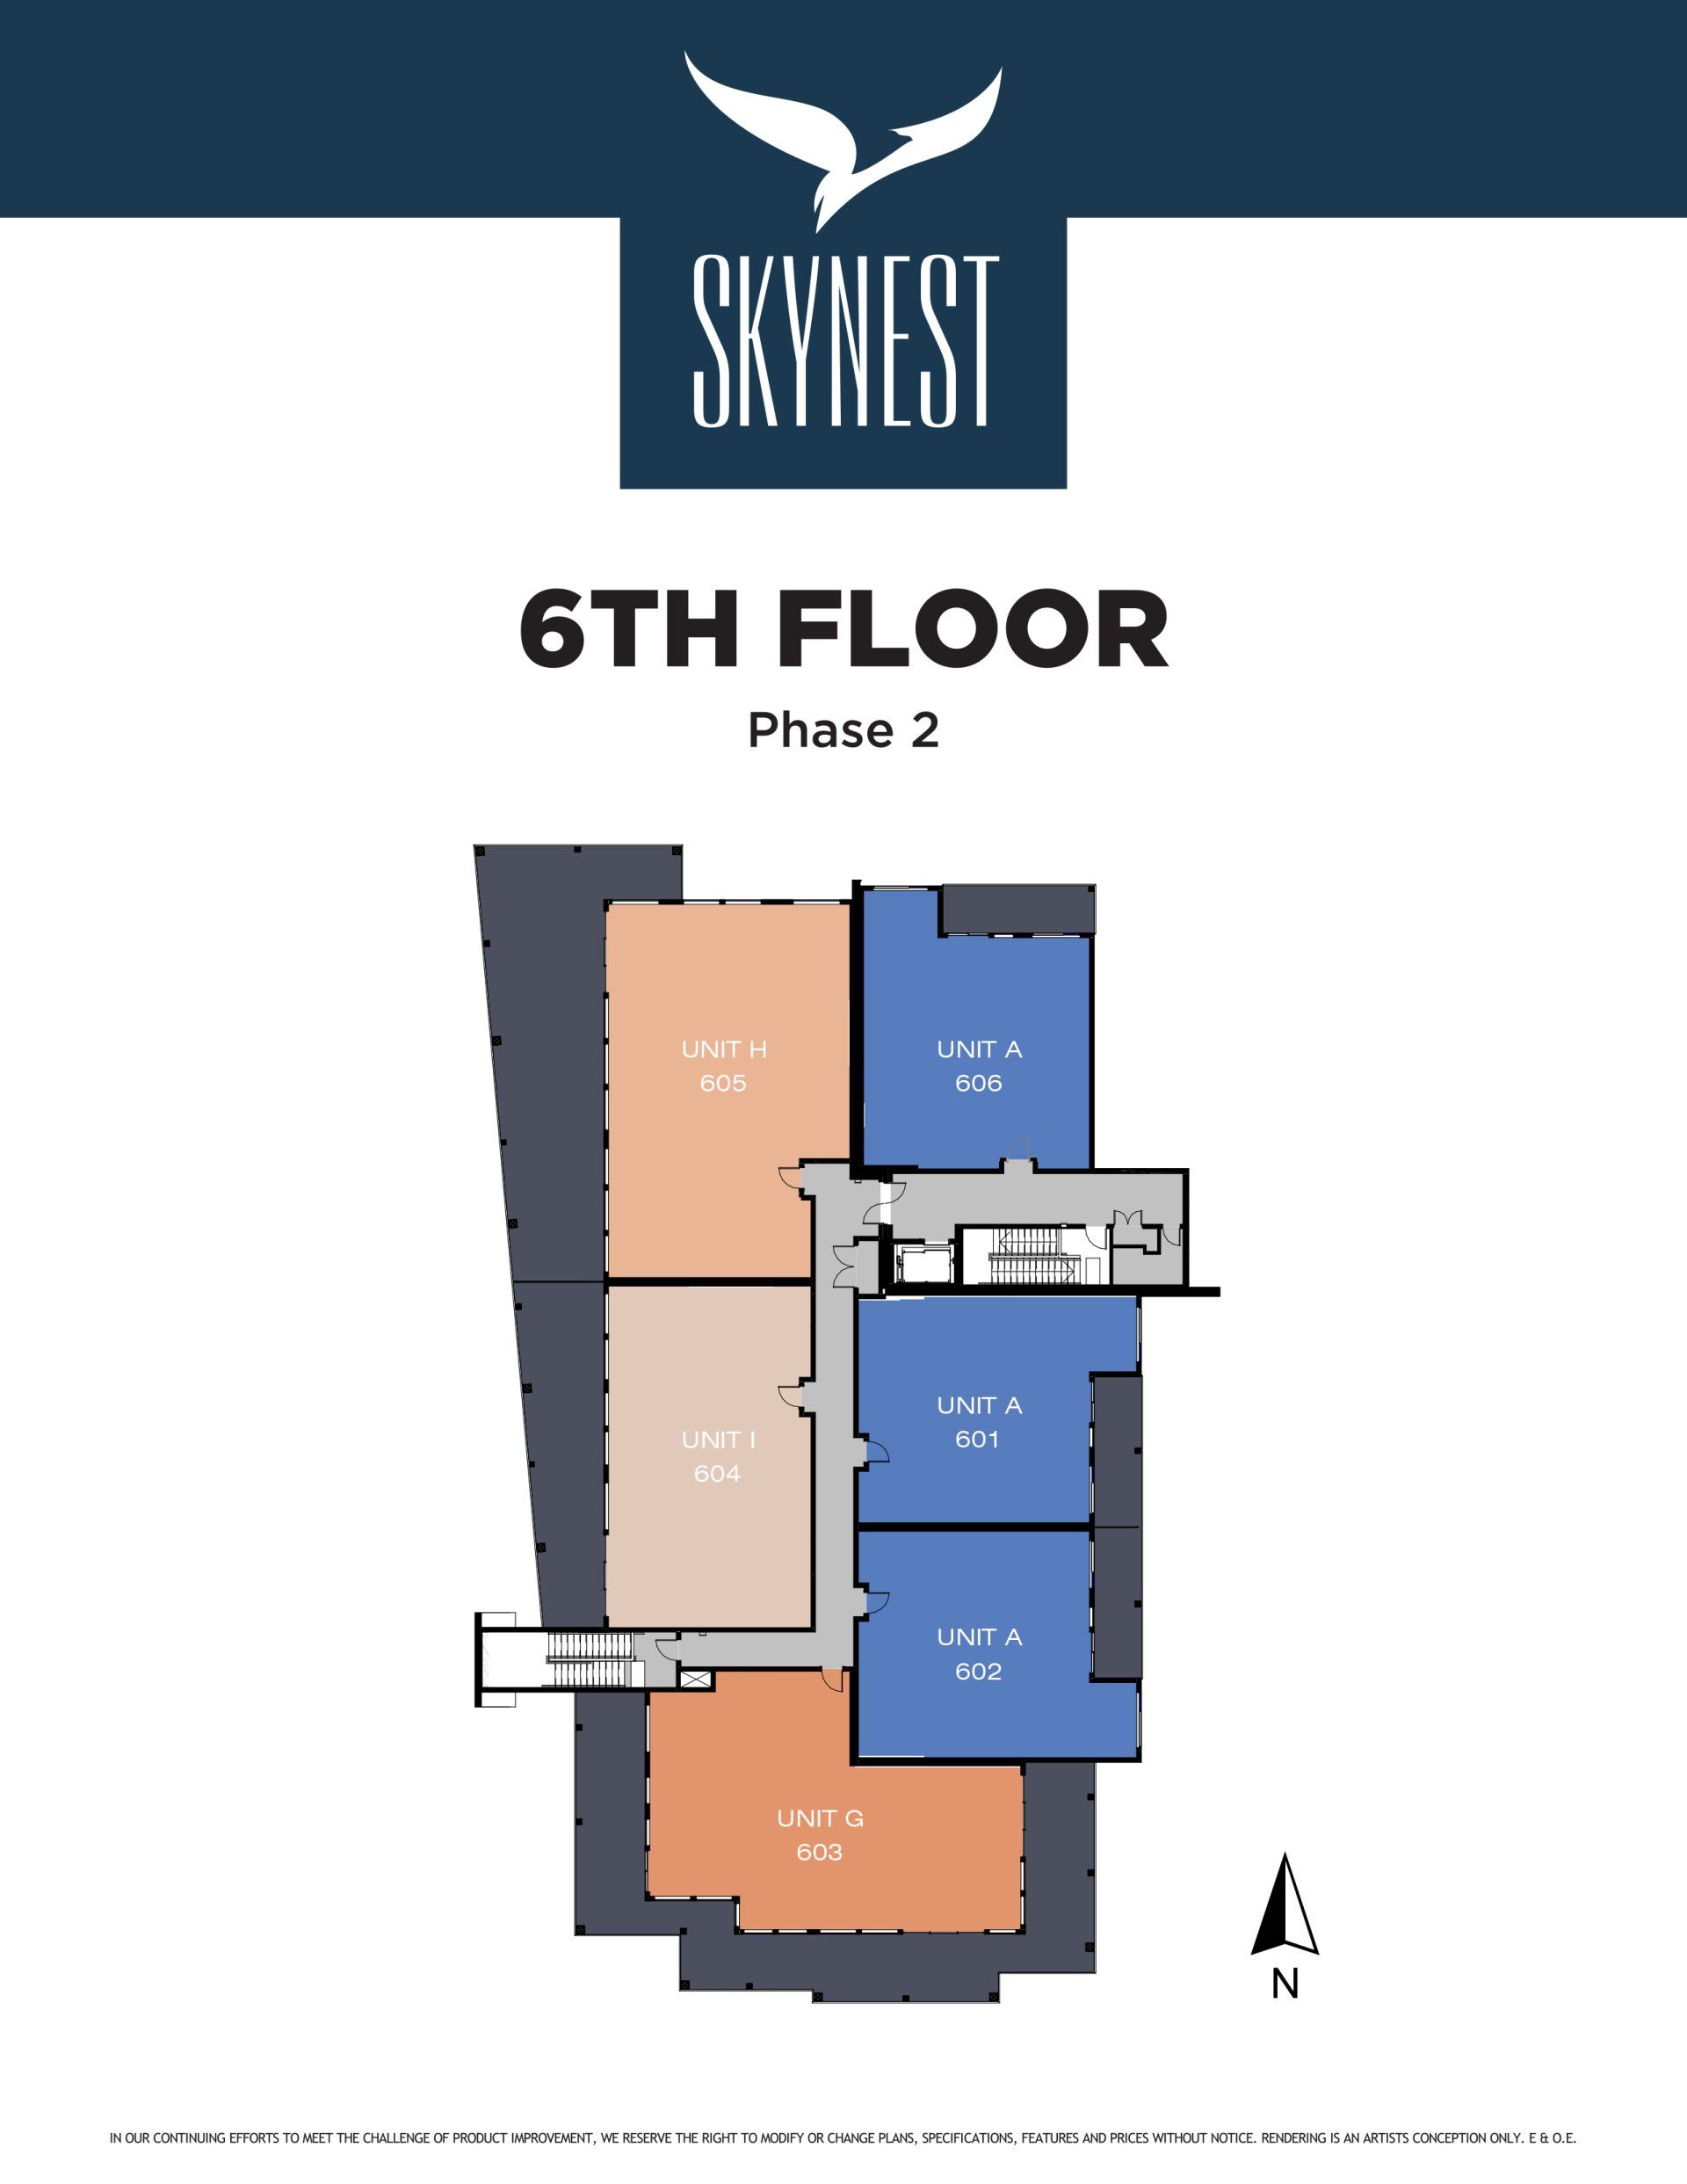 Skynest Condos Floor Site Plan 6th Floor Phase I